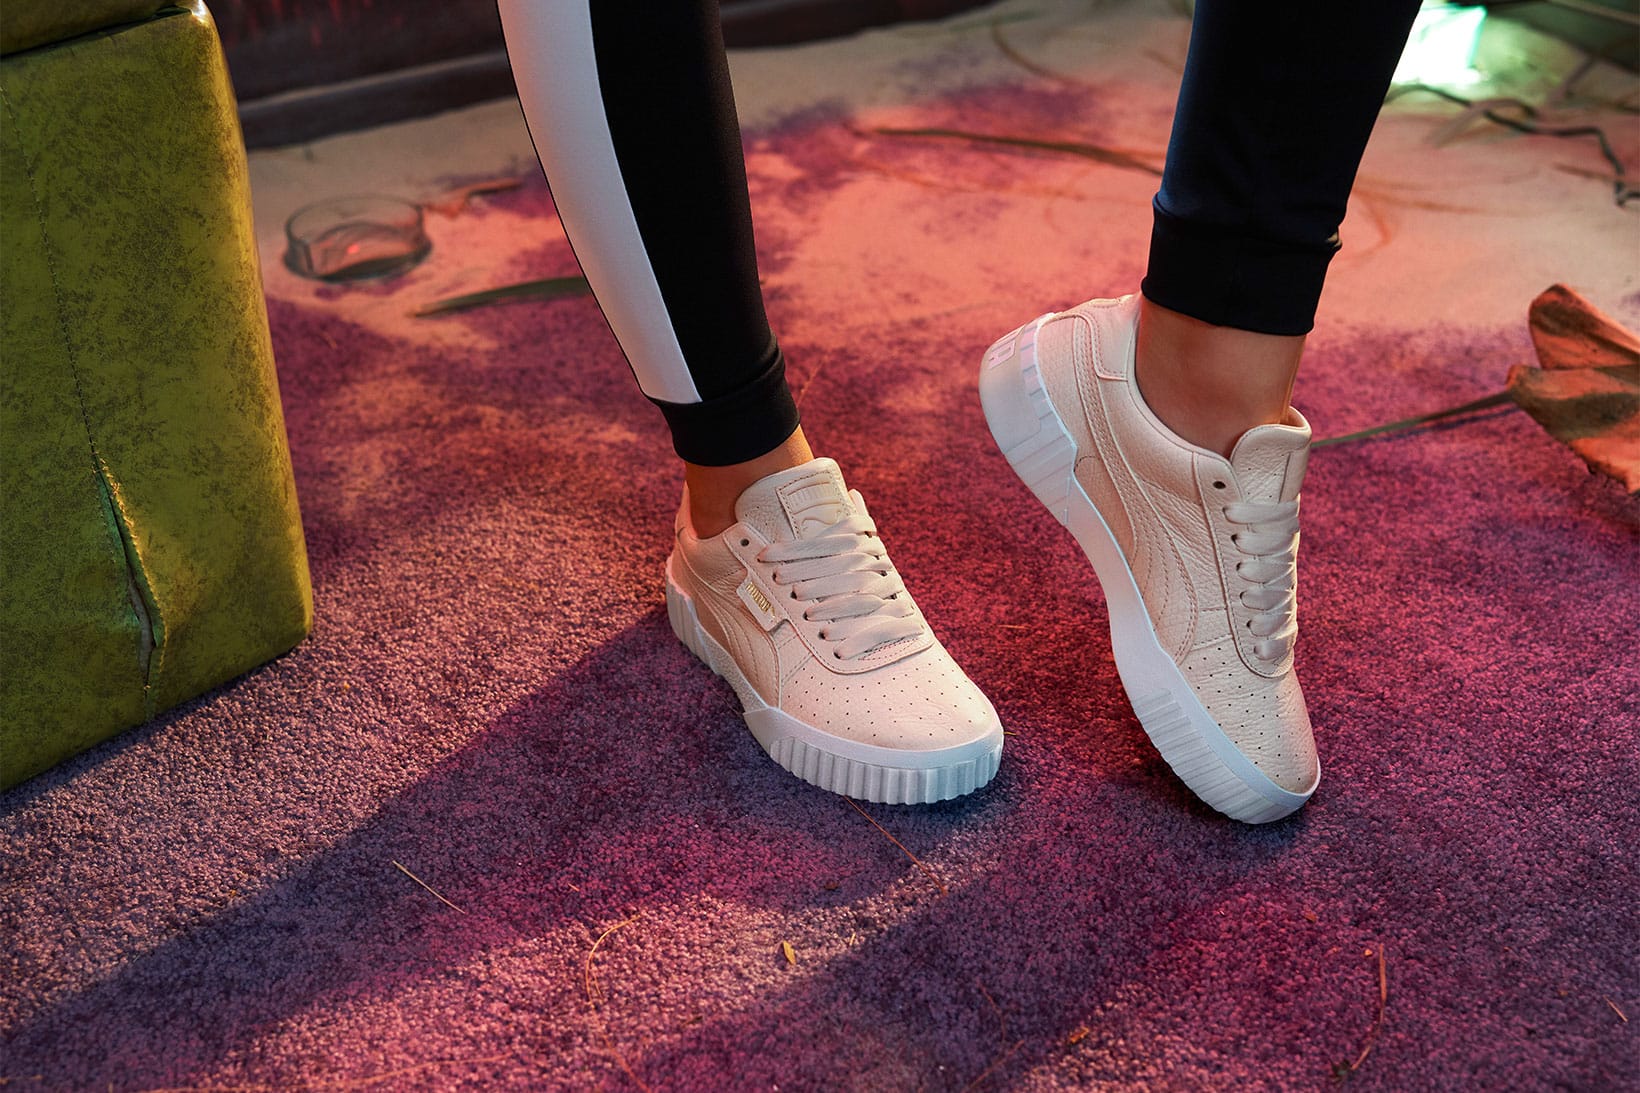 PUMA Releases Women's Cali Sneaker 